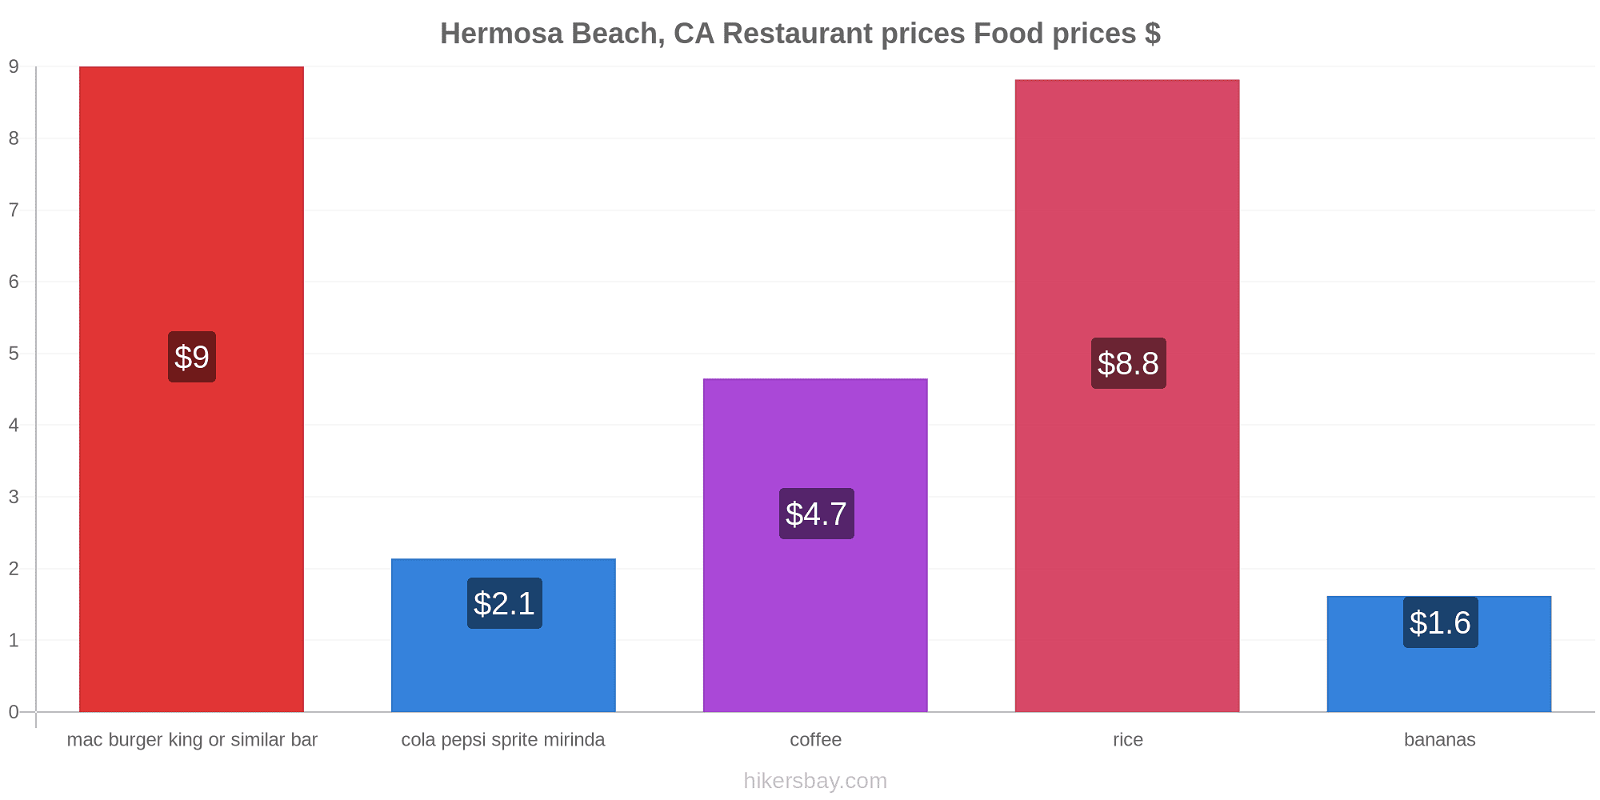 Hermosa Beach, CA price changes hikersbay.com